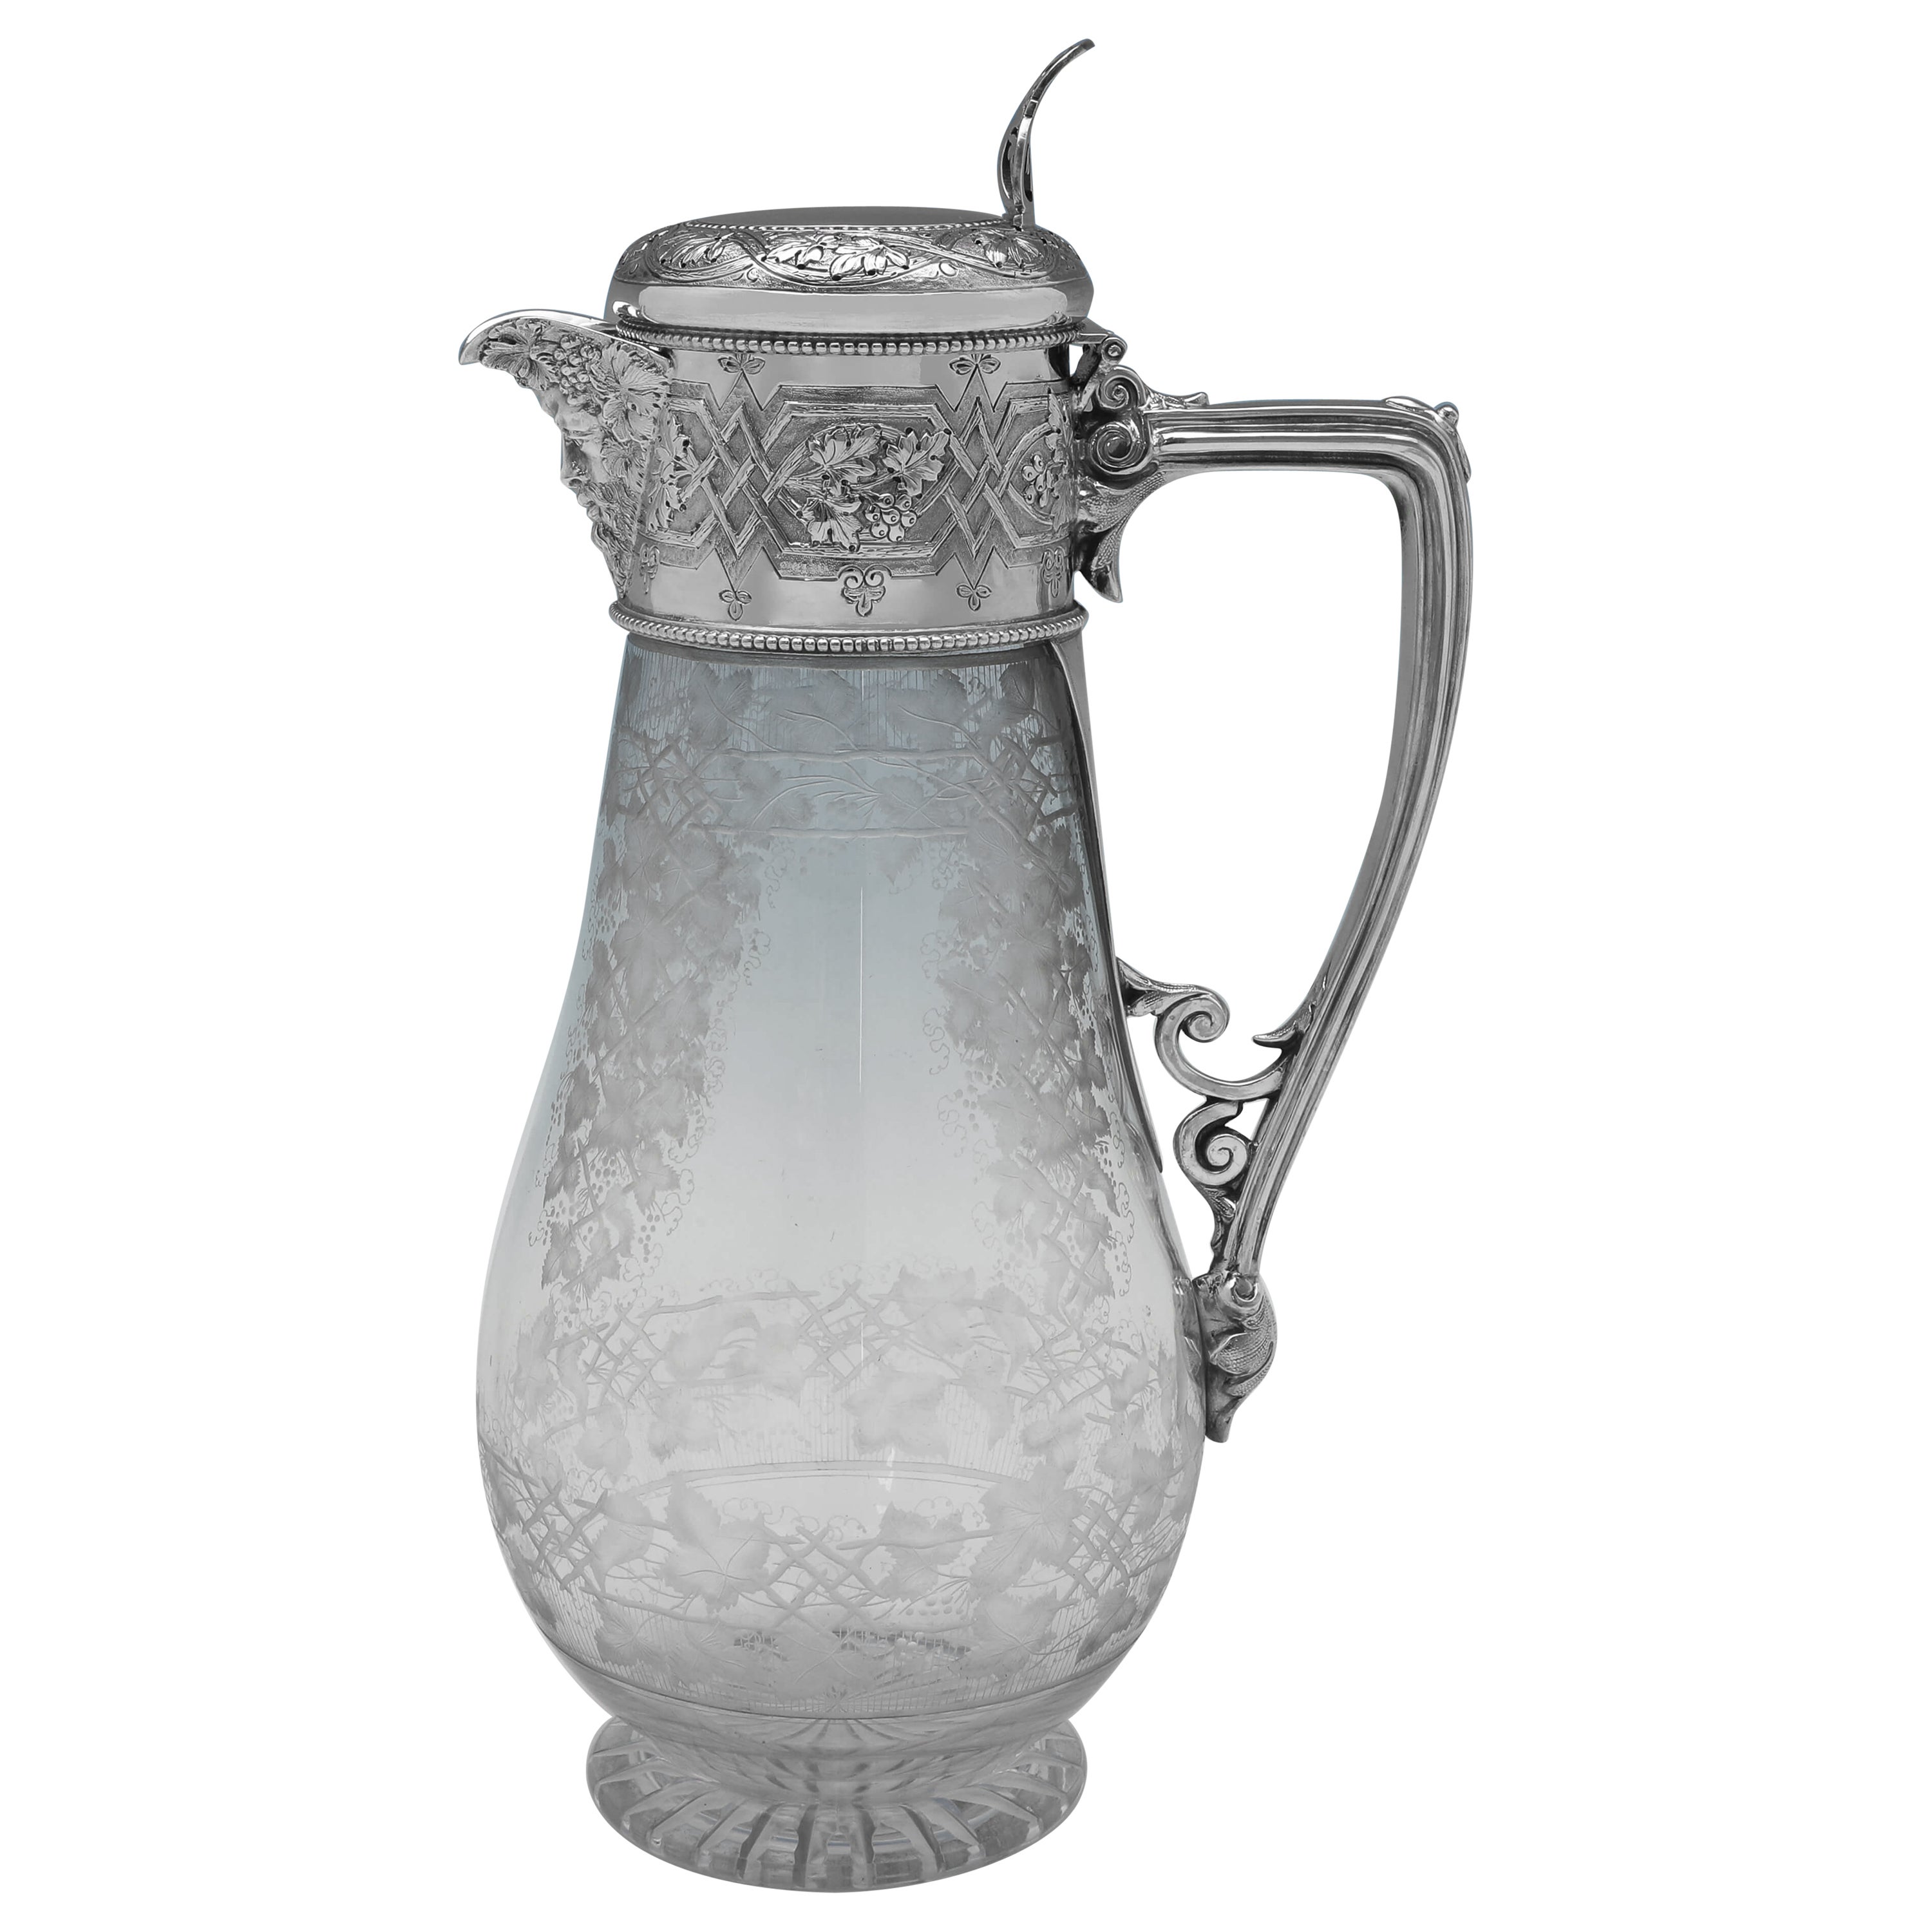 Victorian Etched Glass & Engraved Antique Sterling Silver Claret Jug - 1875 